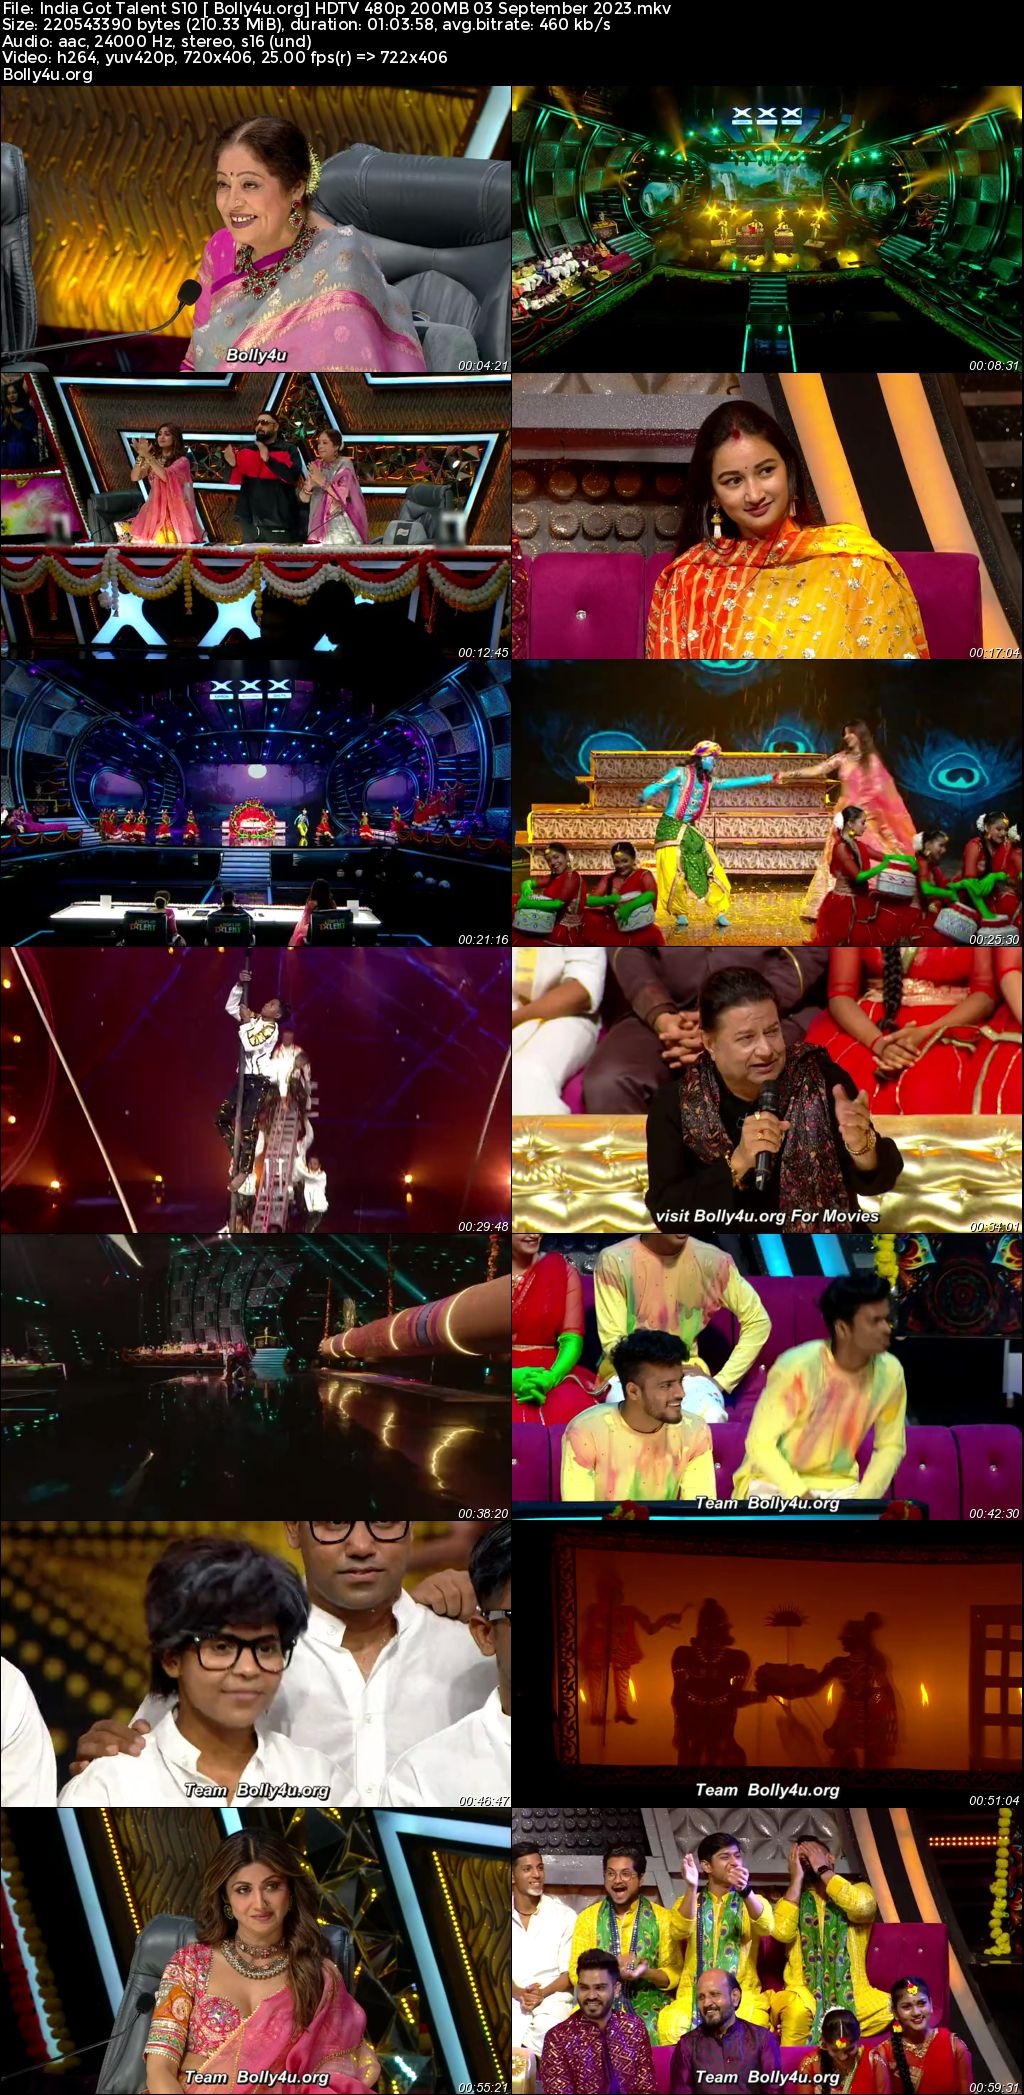 India Got Talent S10 HDTV 480p 200MB 03 September 2023 Download